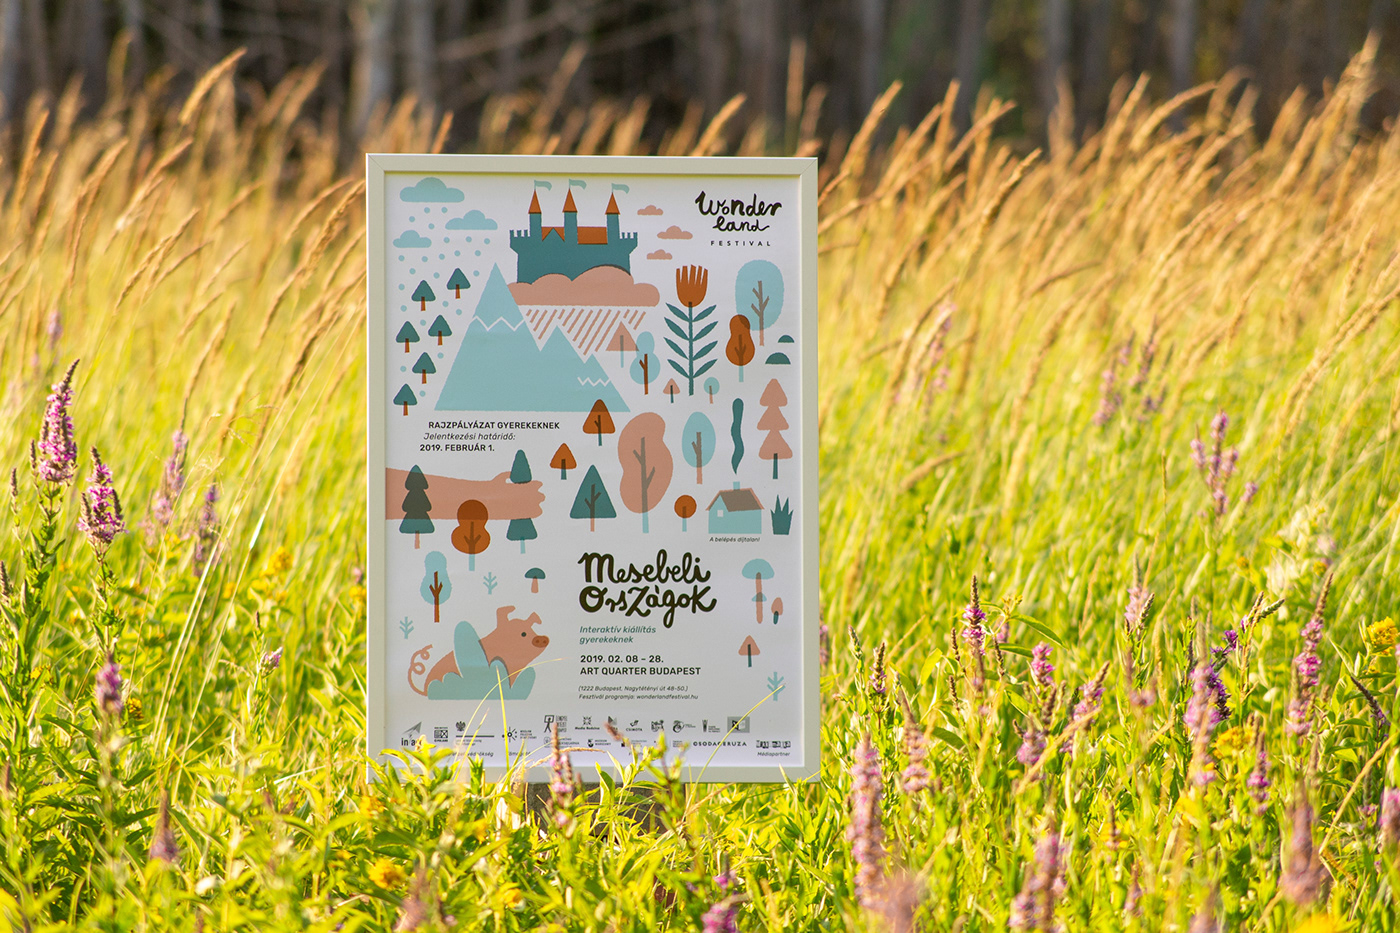 poster forest fable poland childrenbooks fairytale brochure Magic   folktale Folklore